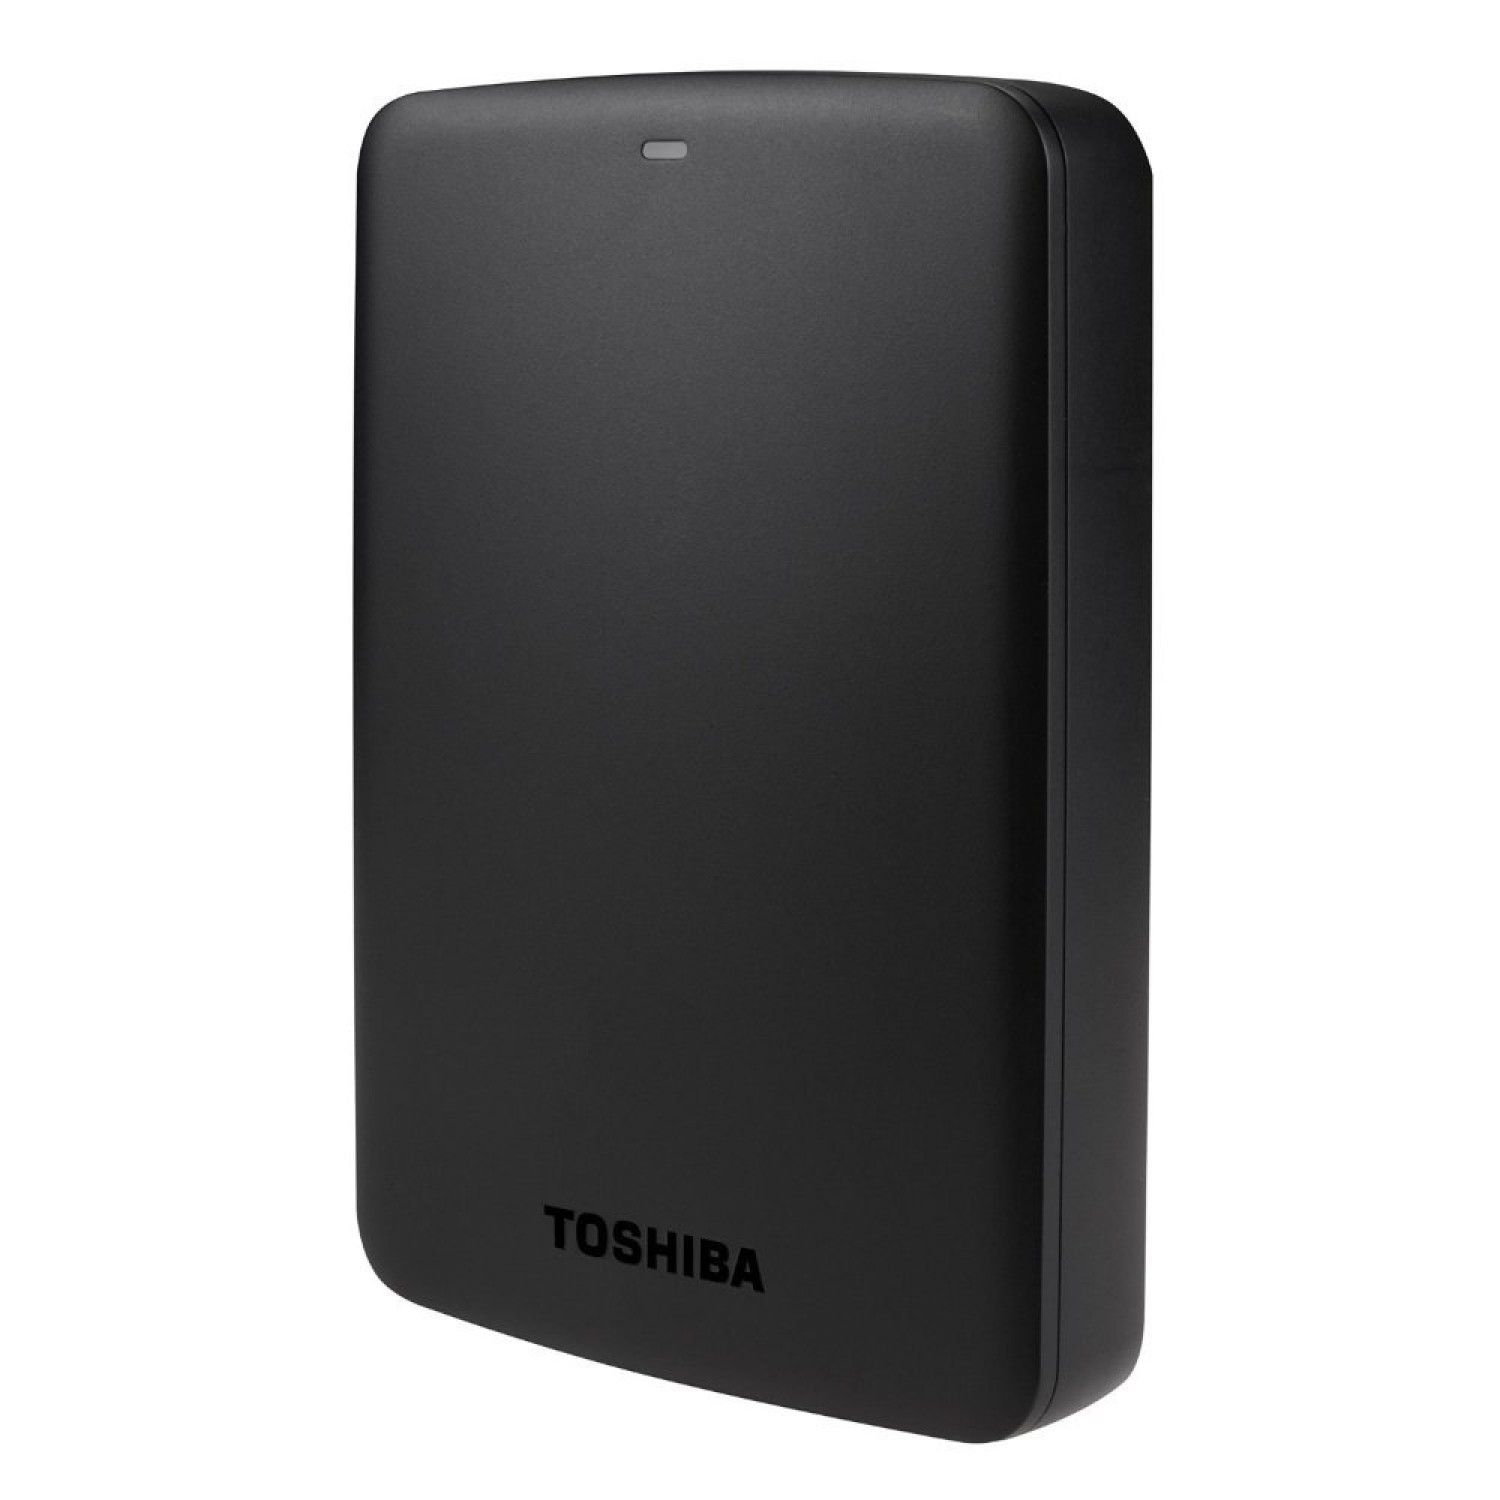 Toshiba External Hard Drive Laptop PC Computer HDD Portable Memory 